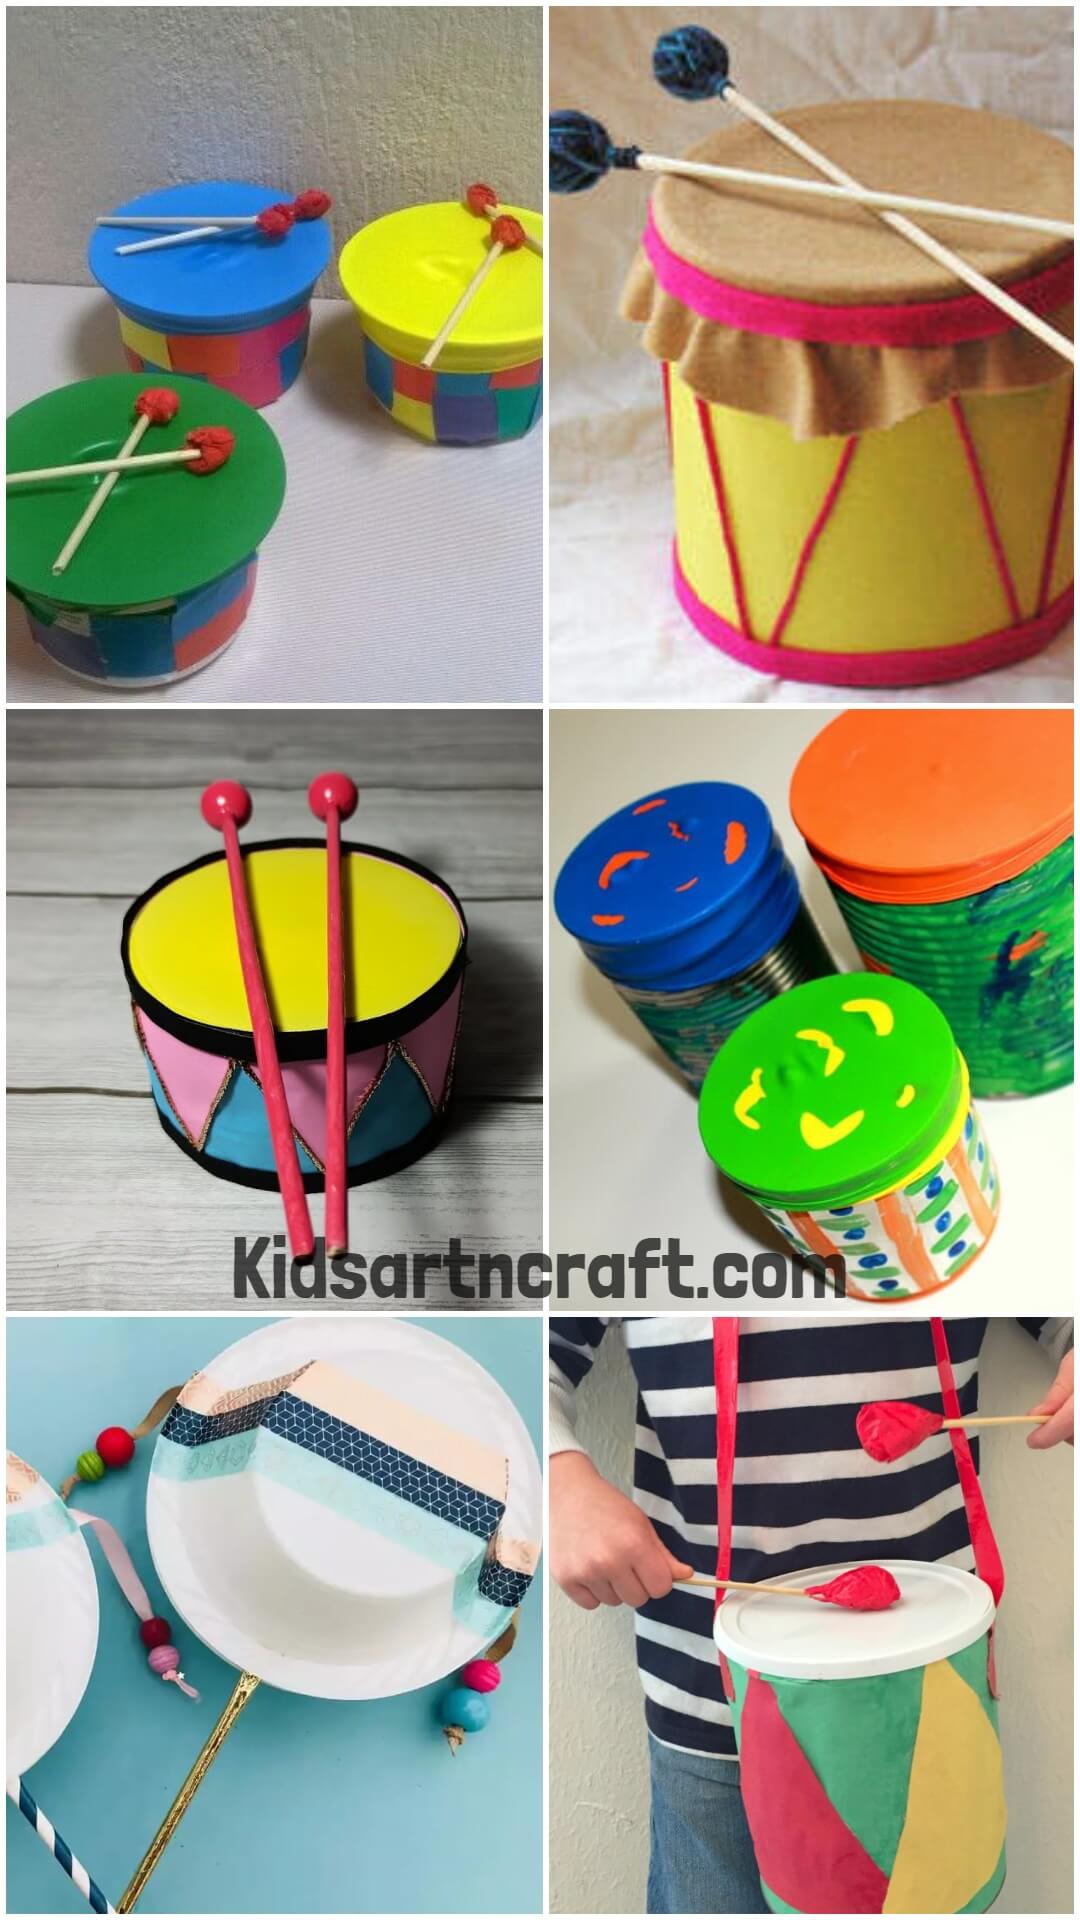  Handmade Drum Crafts For Kids